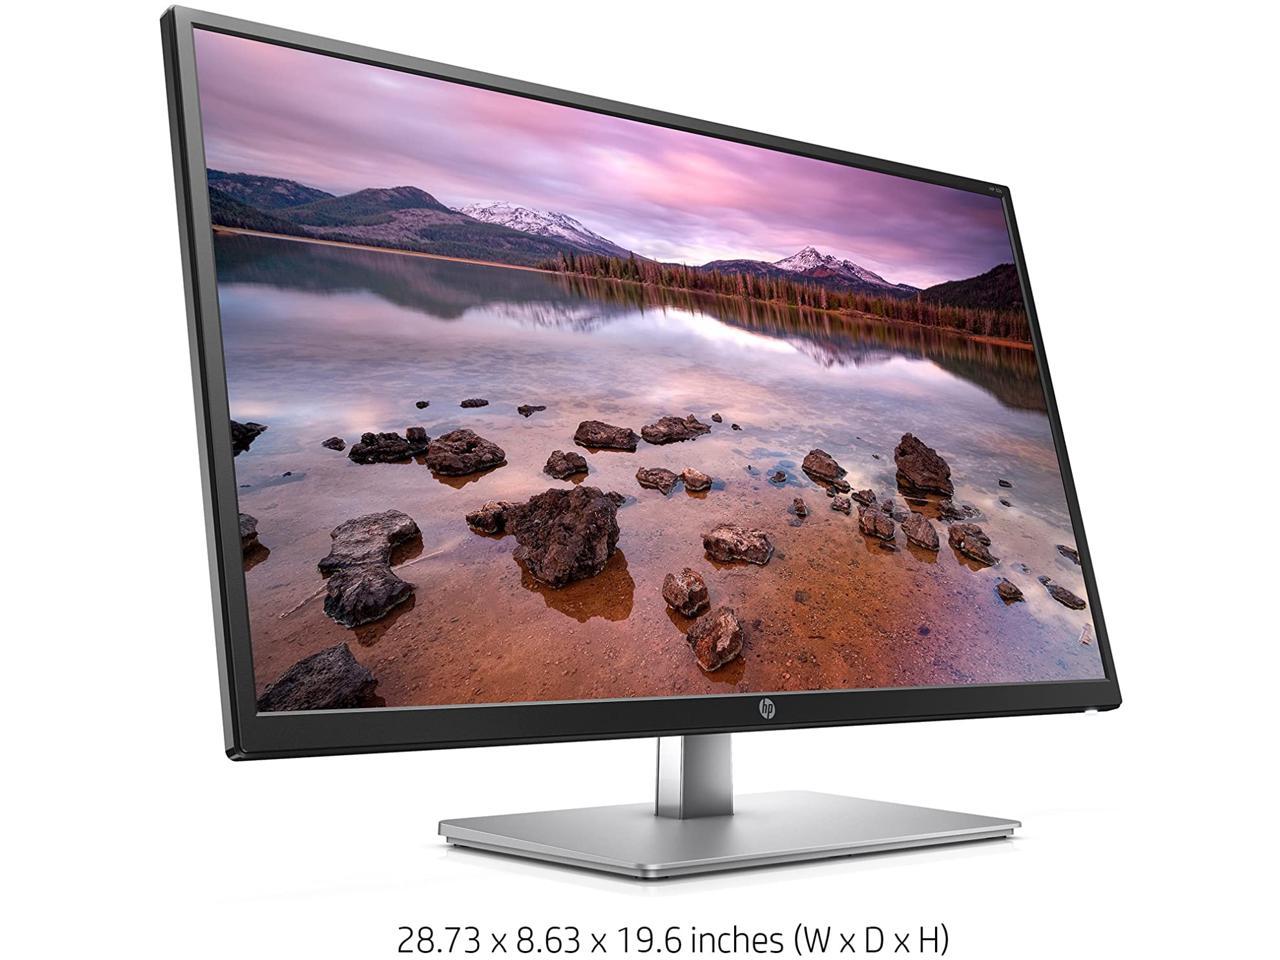 HP 31.5" Full HD Display with Tilt Adjustment - 16:9 - 1920 x 1080 - LED Backlit - Anti-Glare - 250 Nit